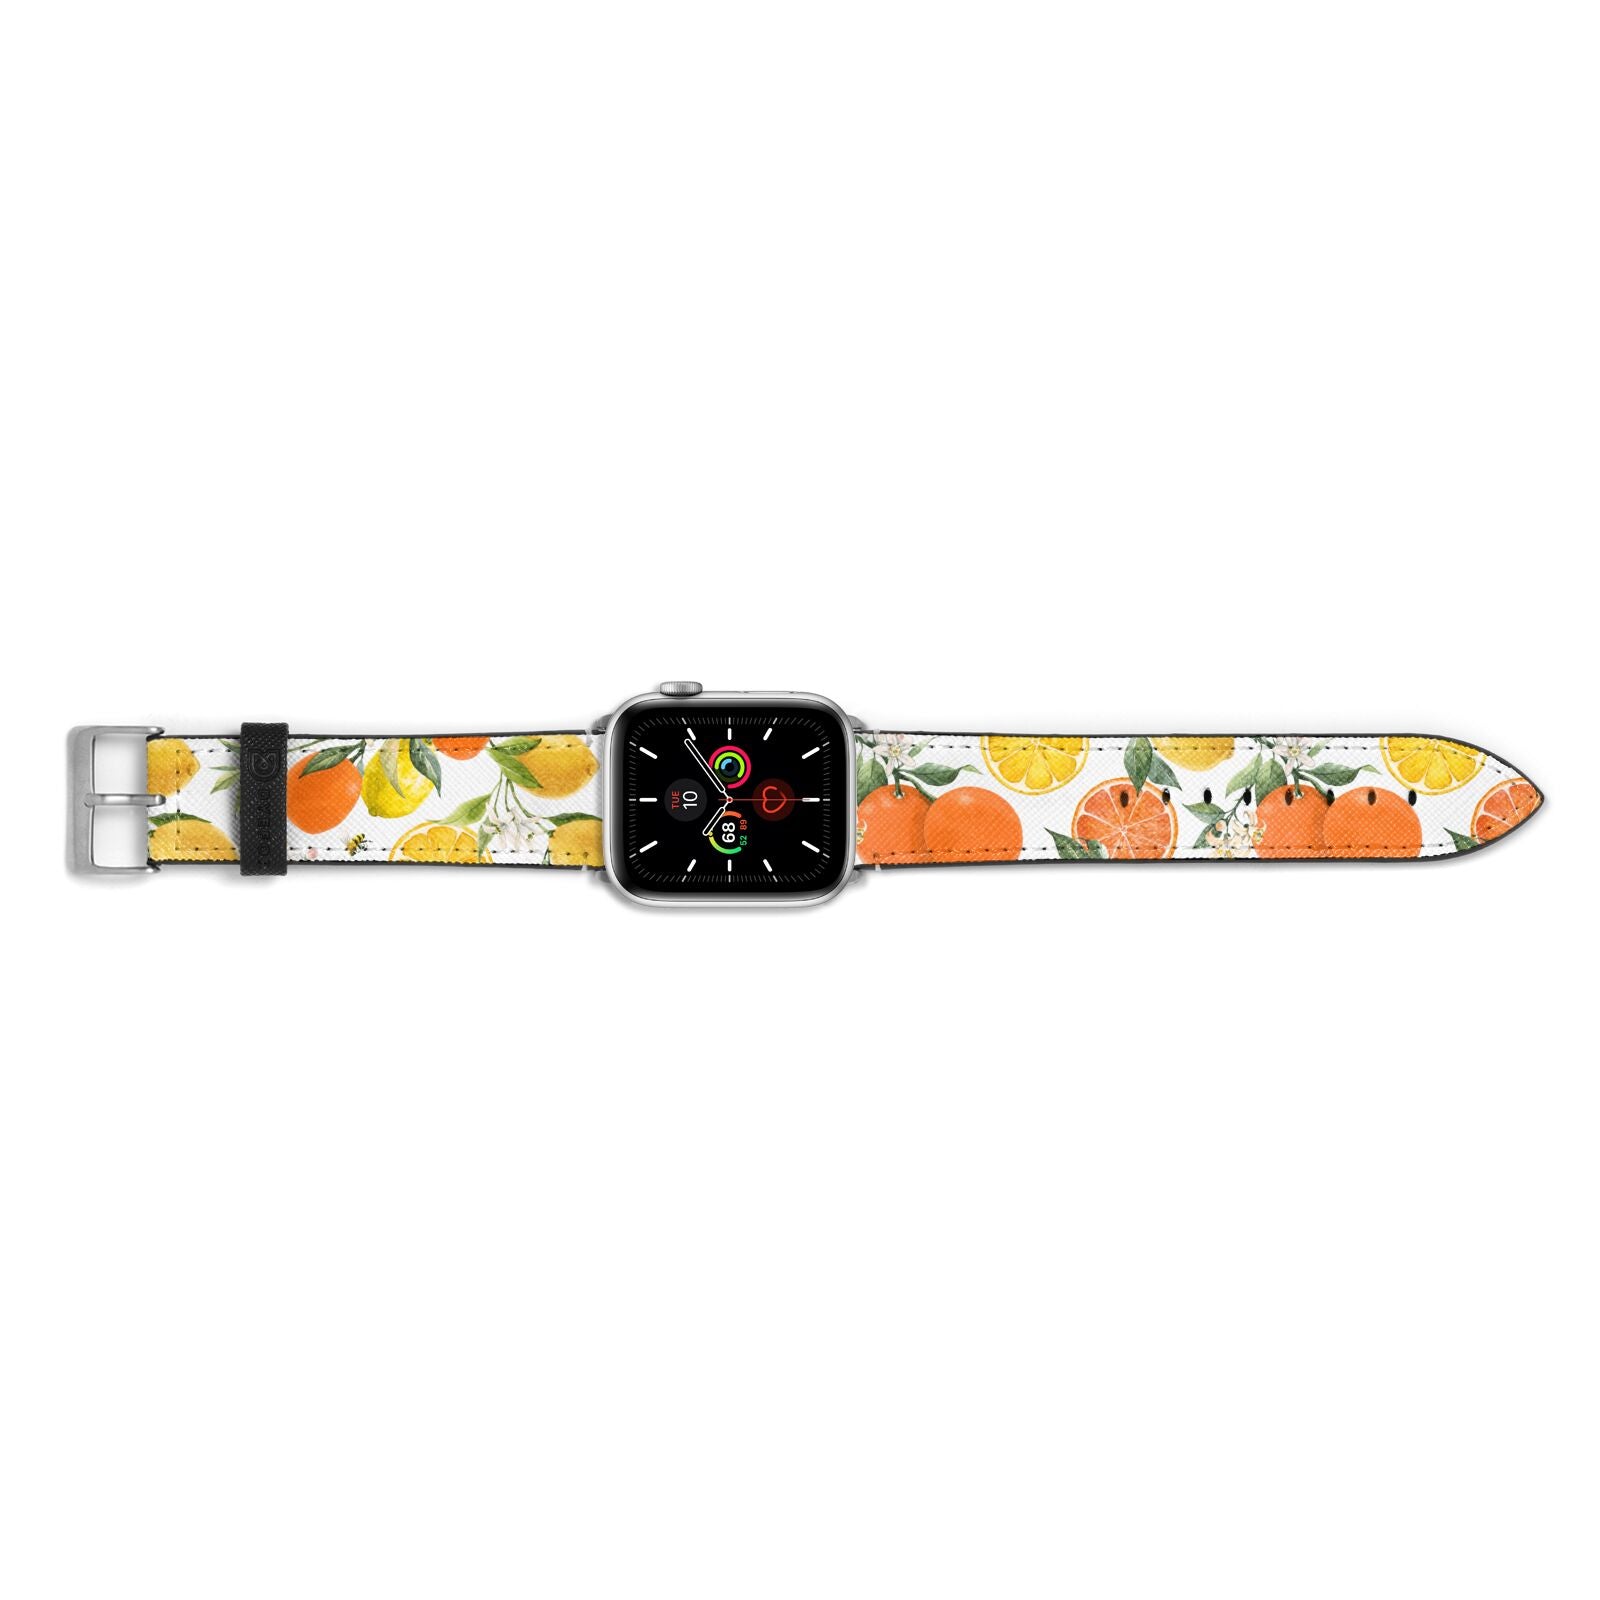 Lemons and Oranges Apple Watch Strap Landscape Image Silver Hardware